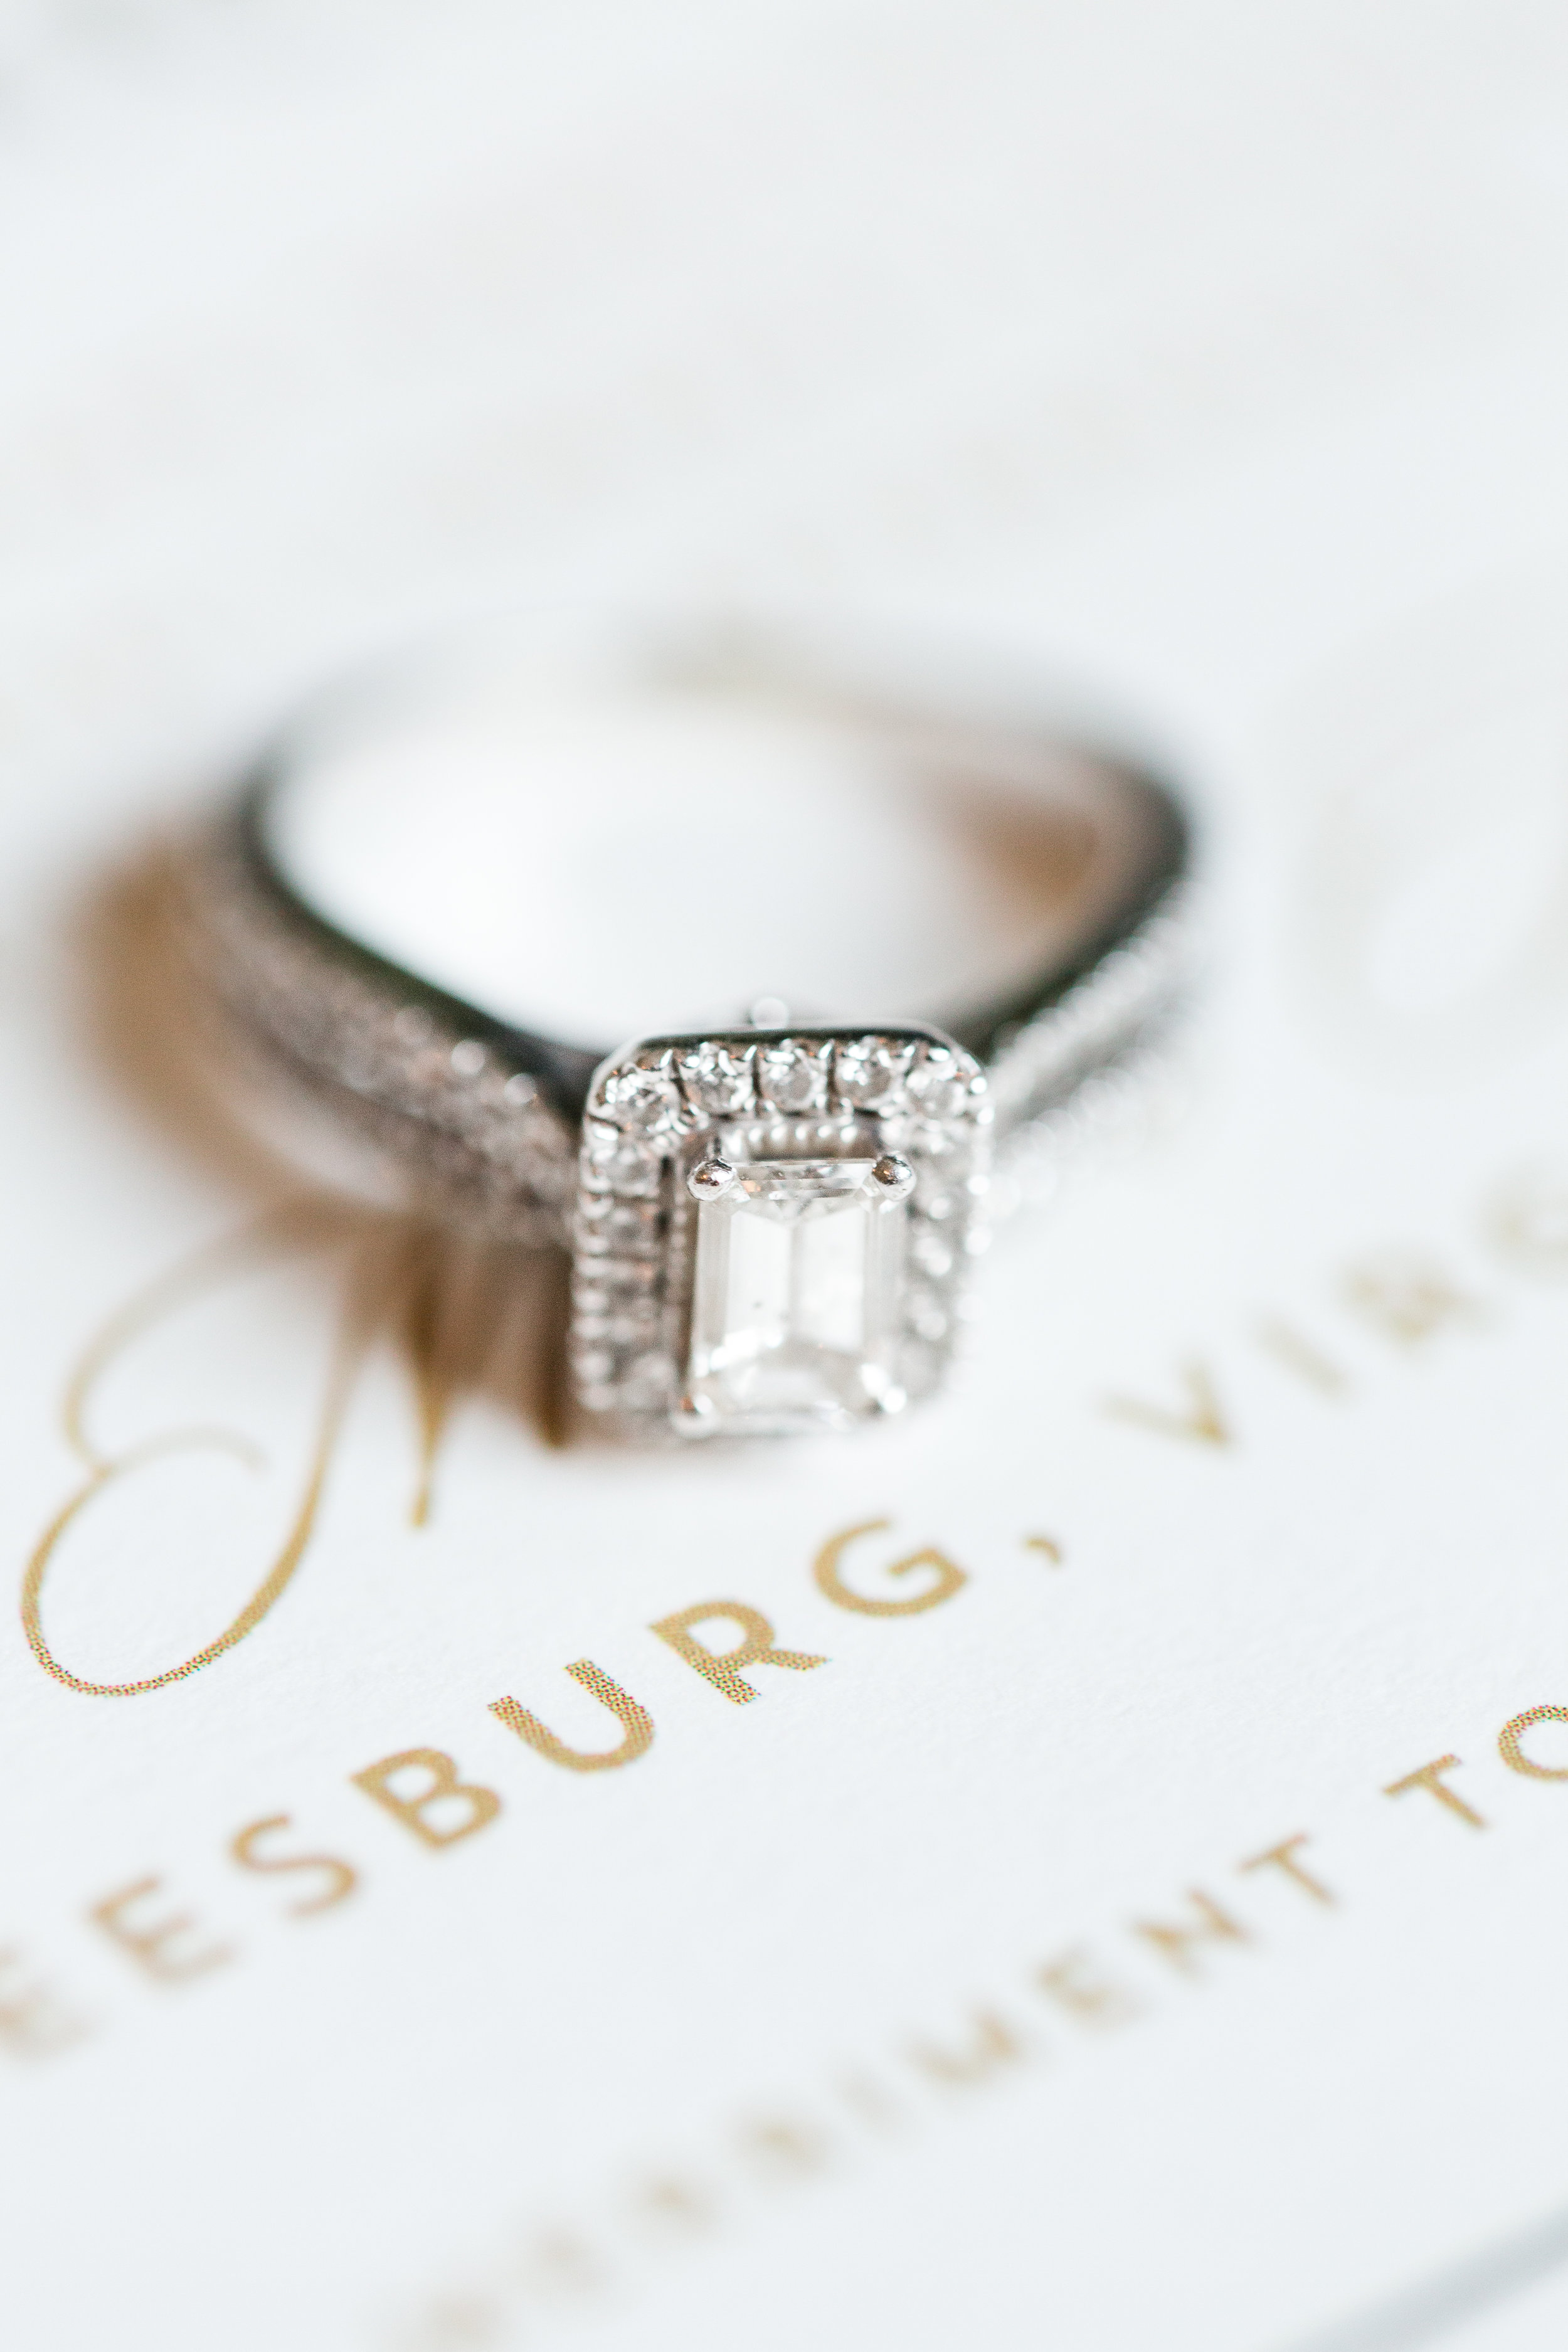 Rectangular Halo Engagement Rings - West Virginia Wedding Photographer - Wedding Venue